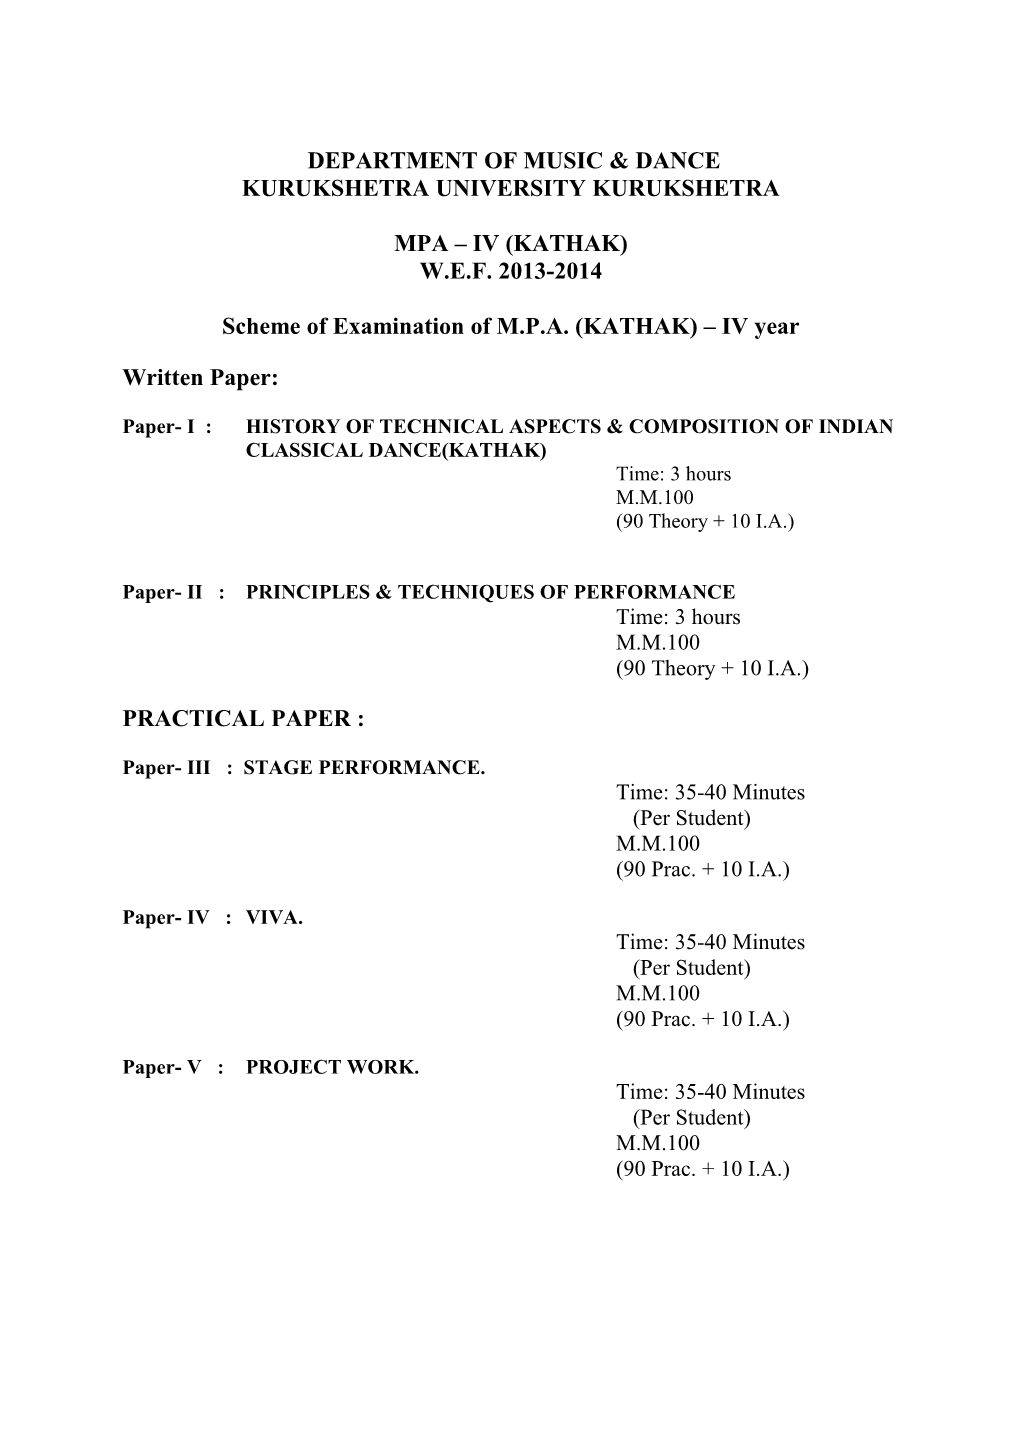 Scheme of Examination of M.P.A. (KATHAK) IV Year